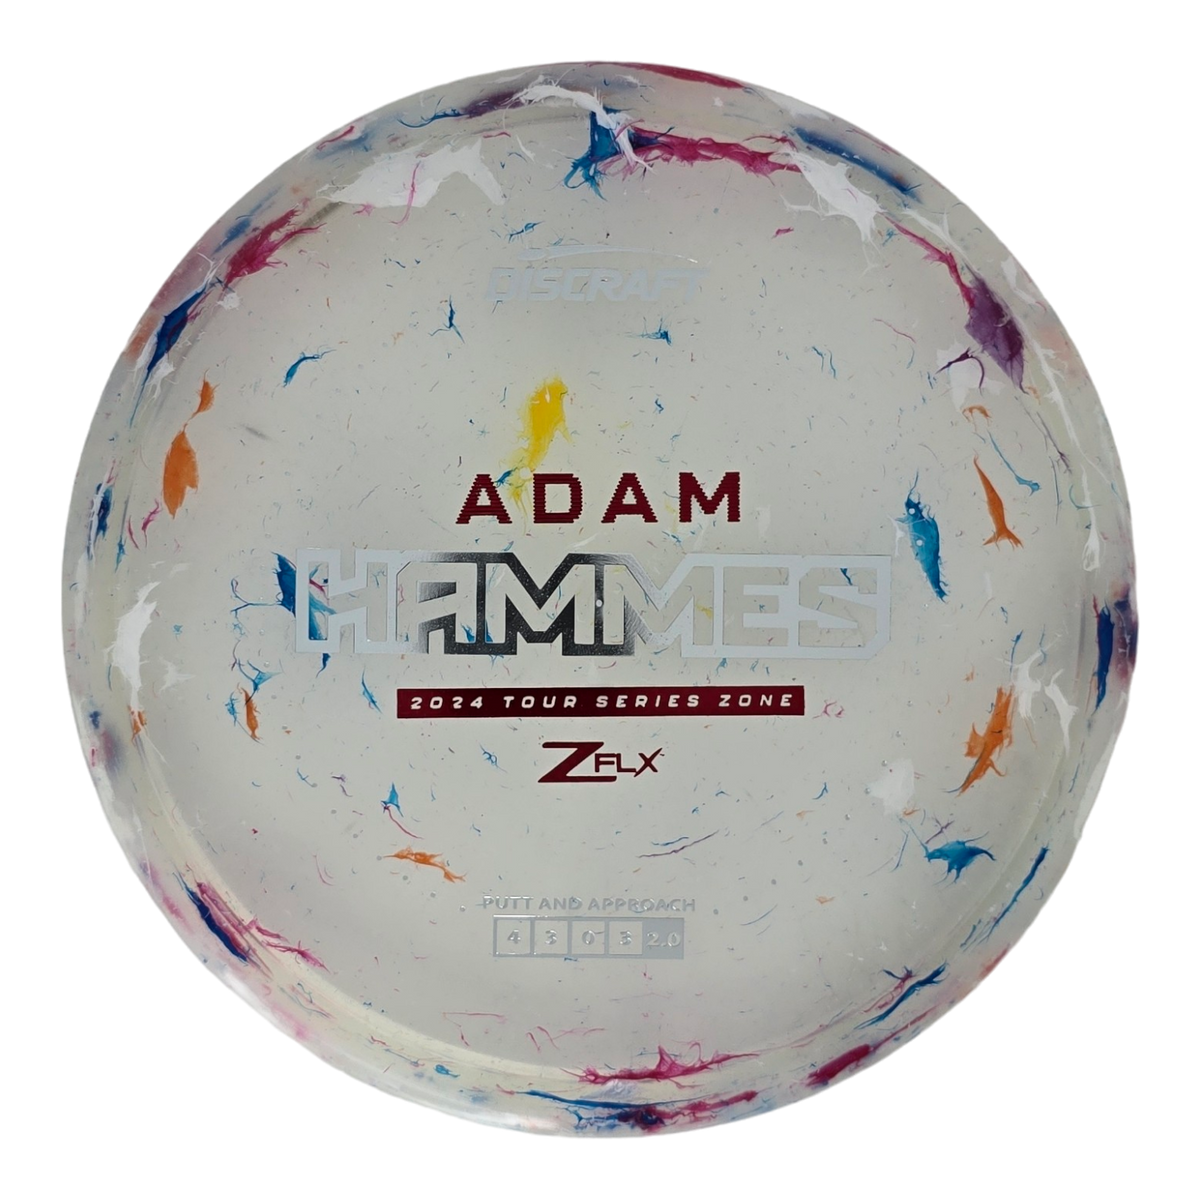 Discraft Adam Hammes Jawbreaker Z FLX Zone - Tour Series (2024)